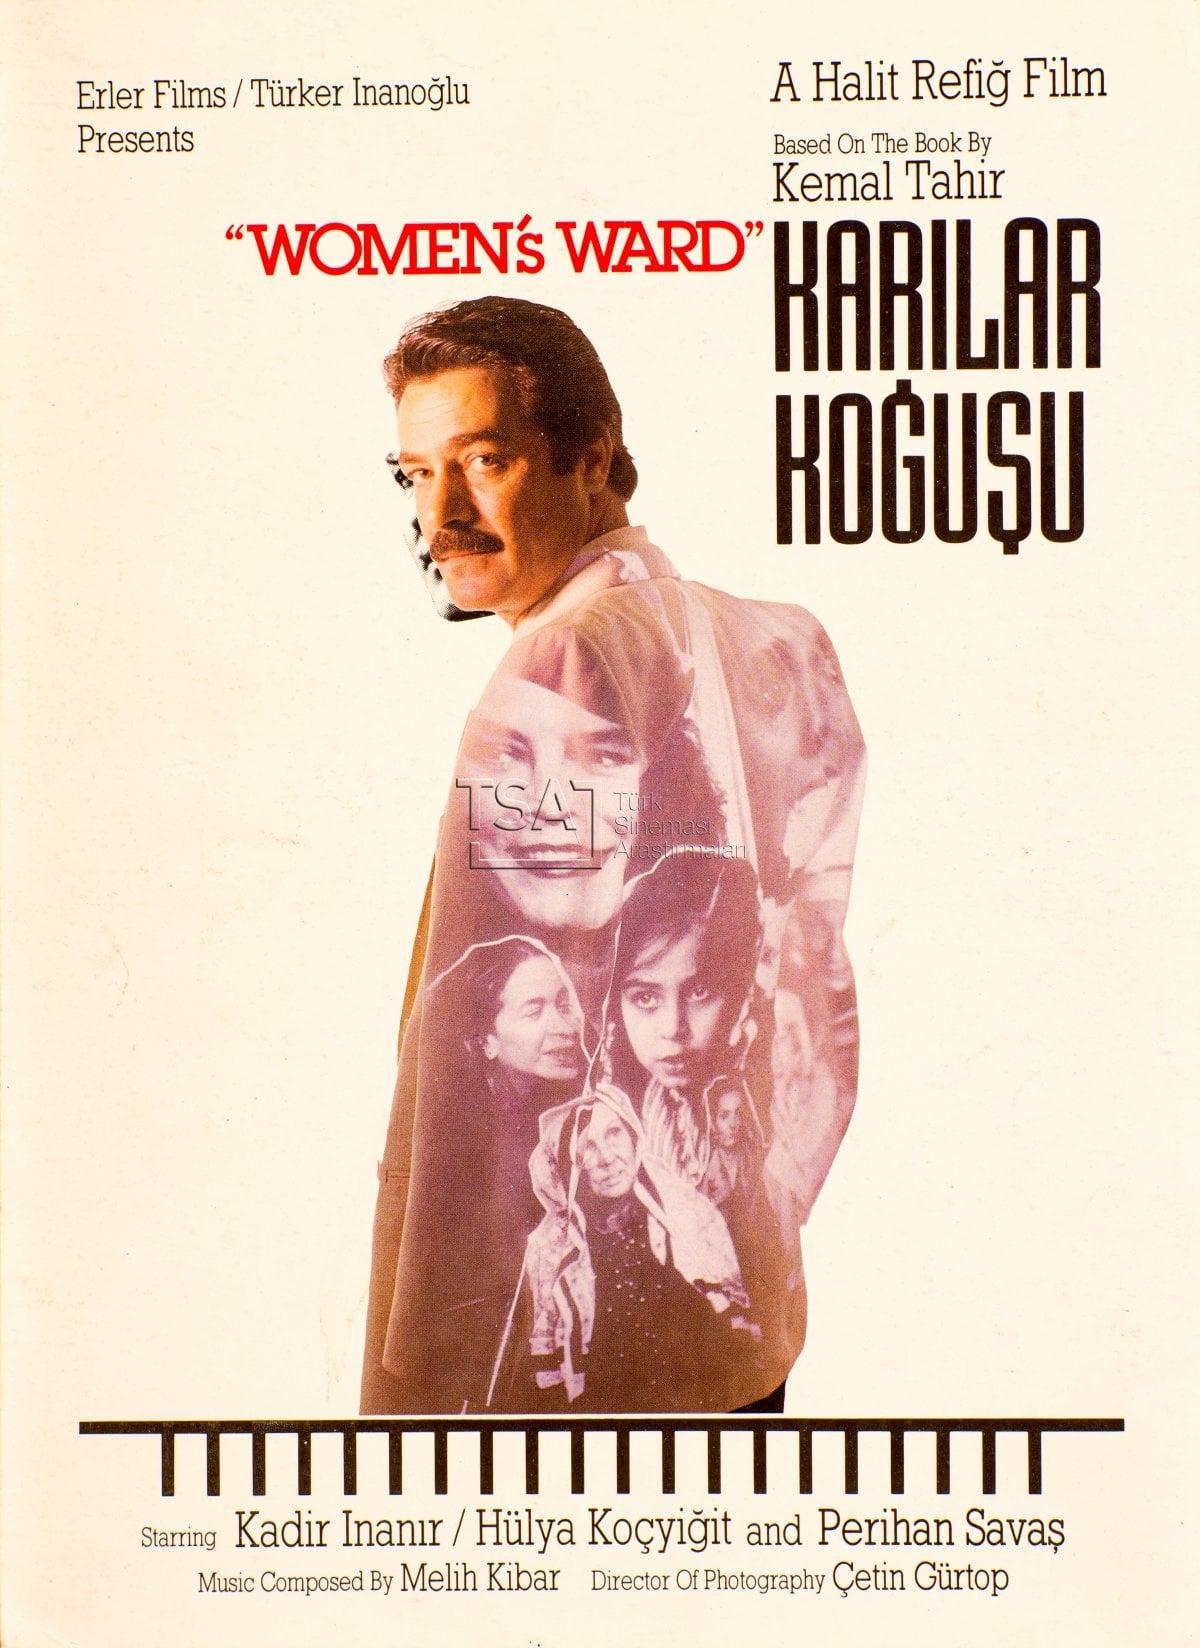 Women's Ward poster